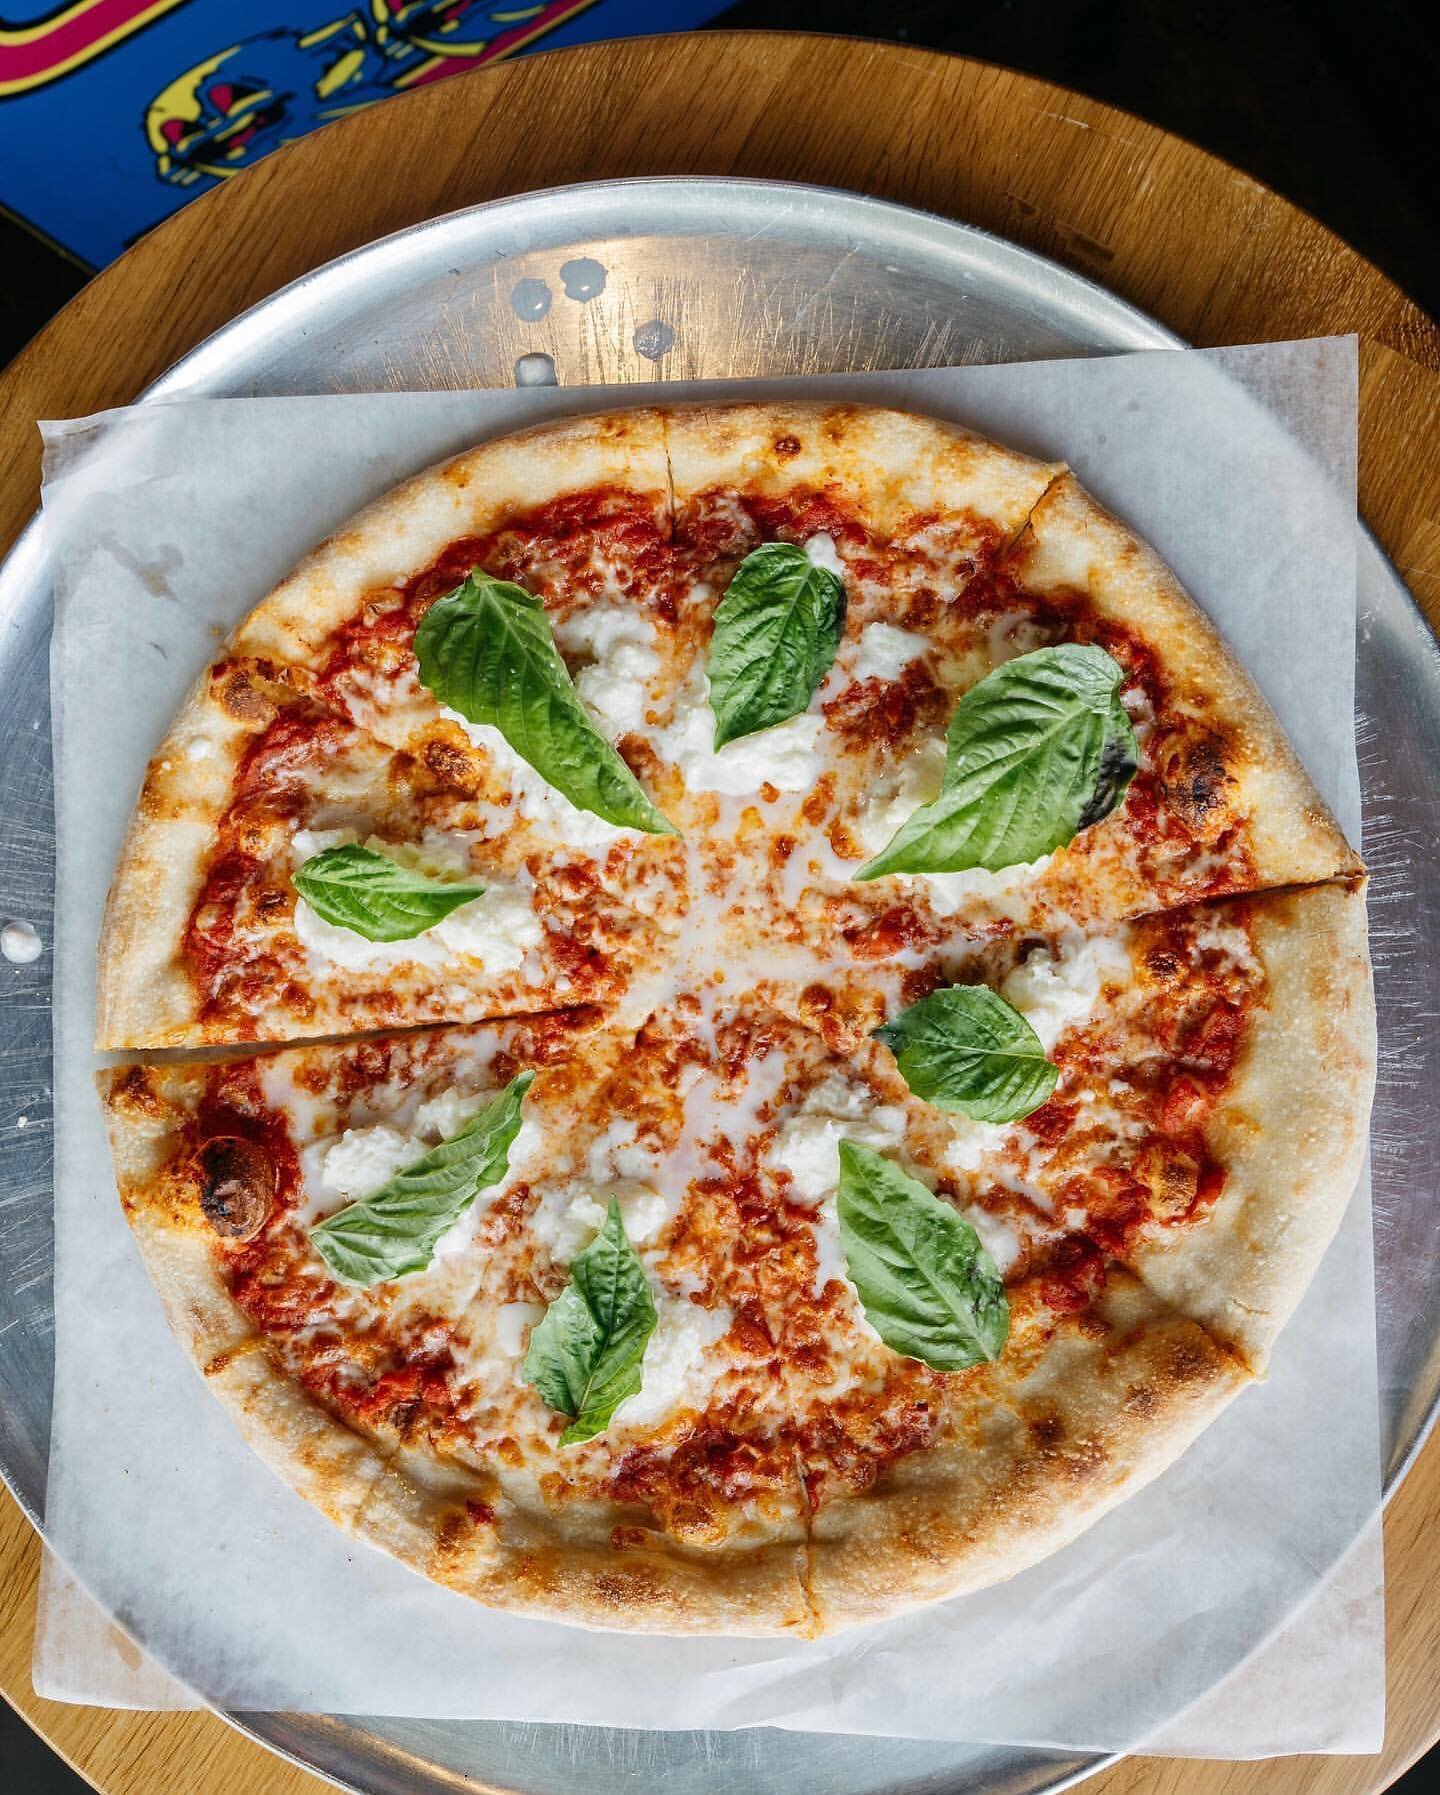 𝐌𝐀𝐑𝐆𝐇𝐄𝐑𝐈𝐓𝐀 𝐌𝐎𝐍𝐃𝐀𝐘𝐒! 💯 today and e͟v͟e͟r͟y Monday!
⠀
$20 Margherita Pizza ALL DAY!
⠀
⠀
⠀
⠀
#margheritamonday #margheritamondays #margheritapizza #atlpizza #atlantapizza #discoveratl #discoveratlanta #exploreatl #atlbeltline #atlantab